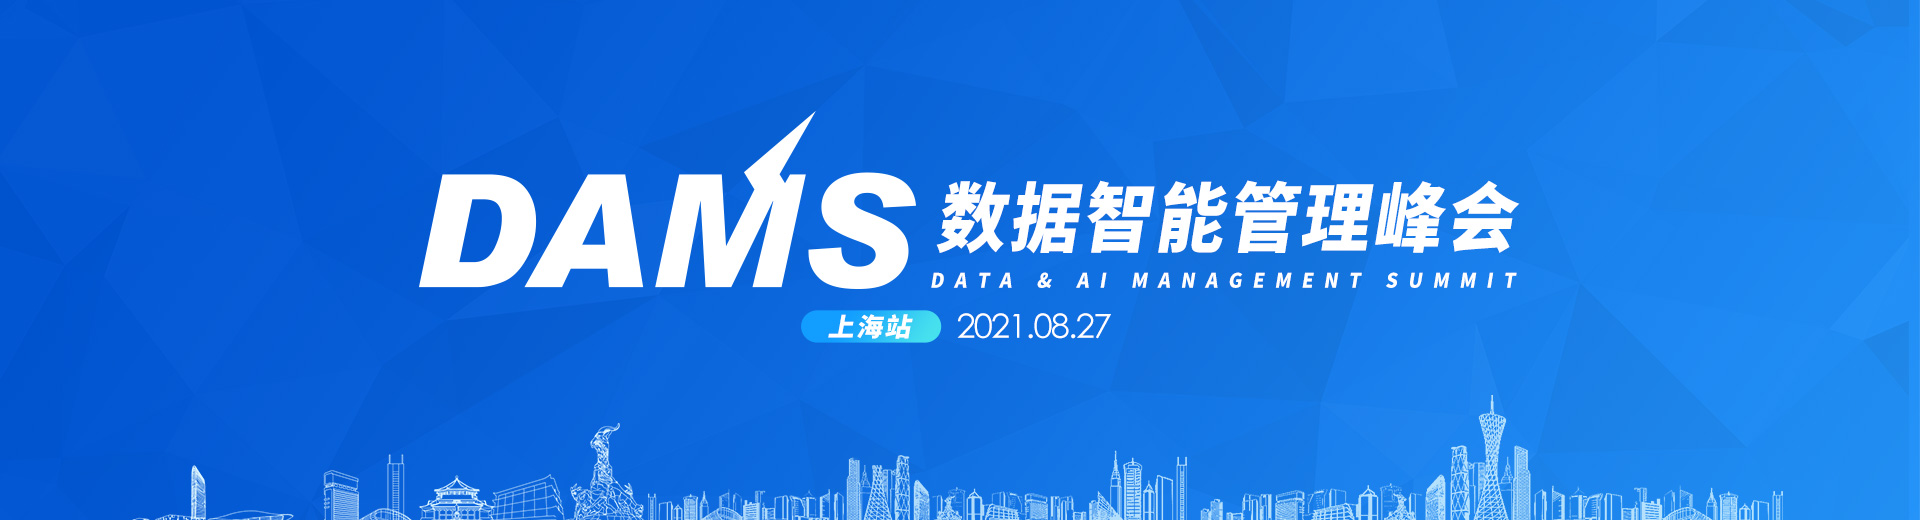 DAMS2016中国数据资产管理峰会